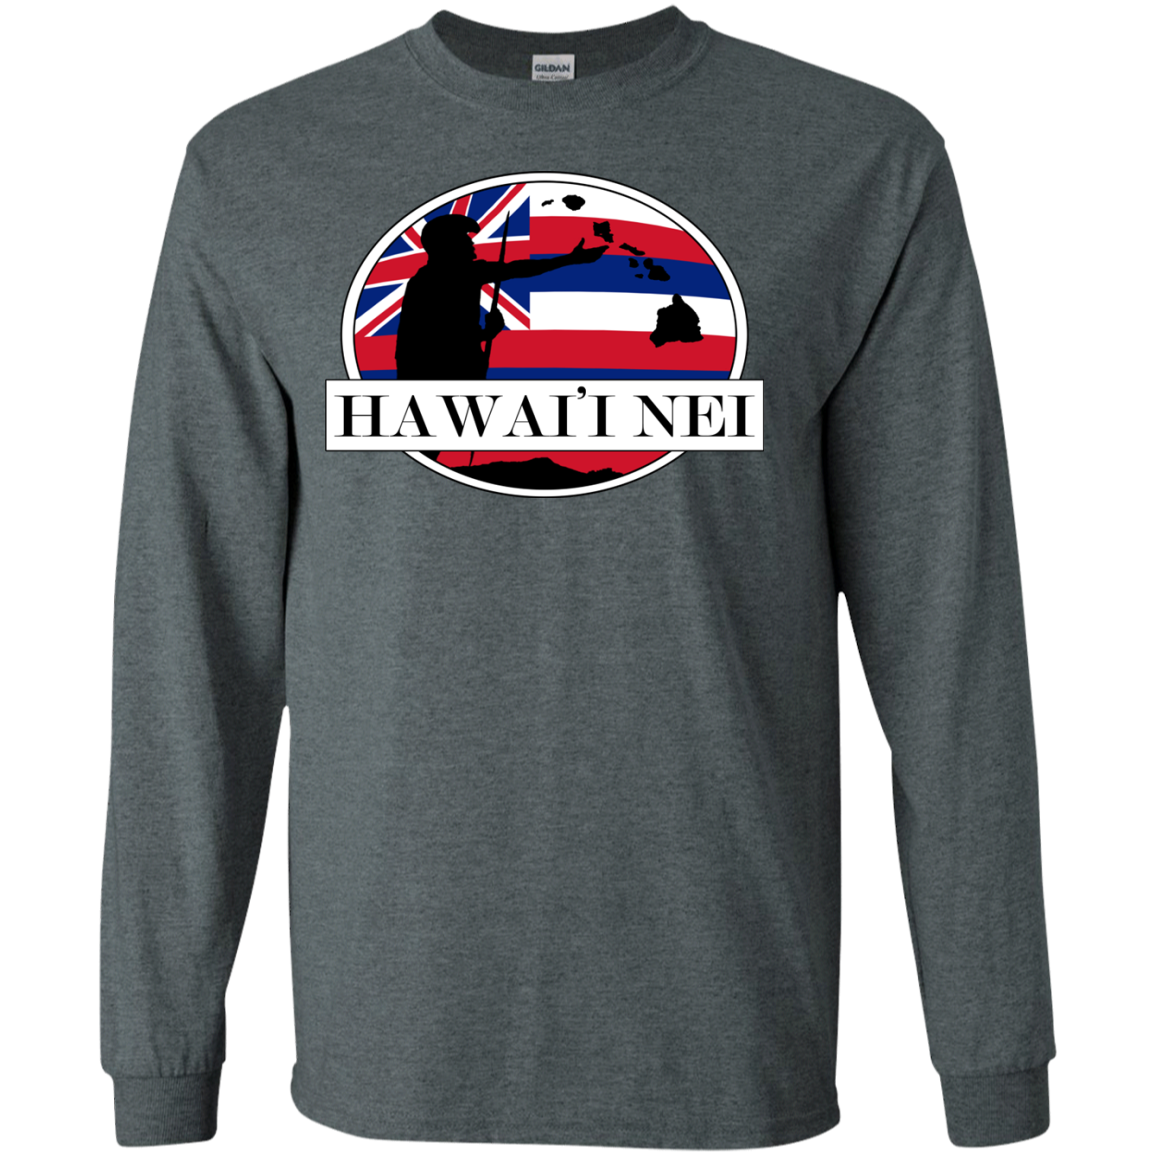 Hawai'i Nei King Kamehameha LS Ultra Cotton Tshirt - Hawaii Nei All Day